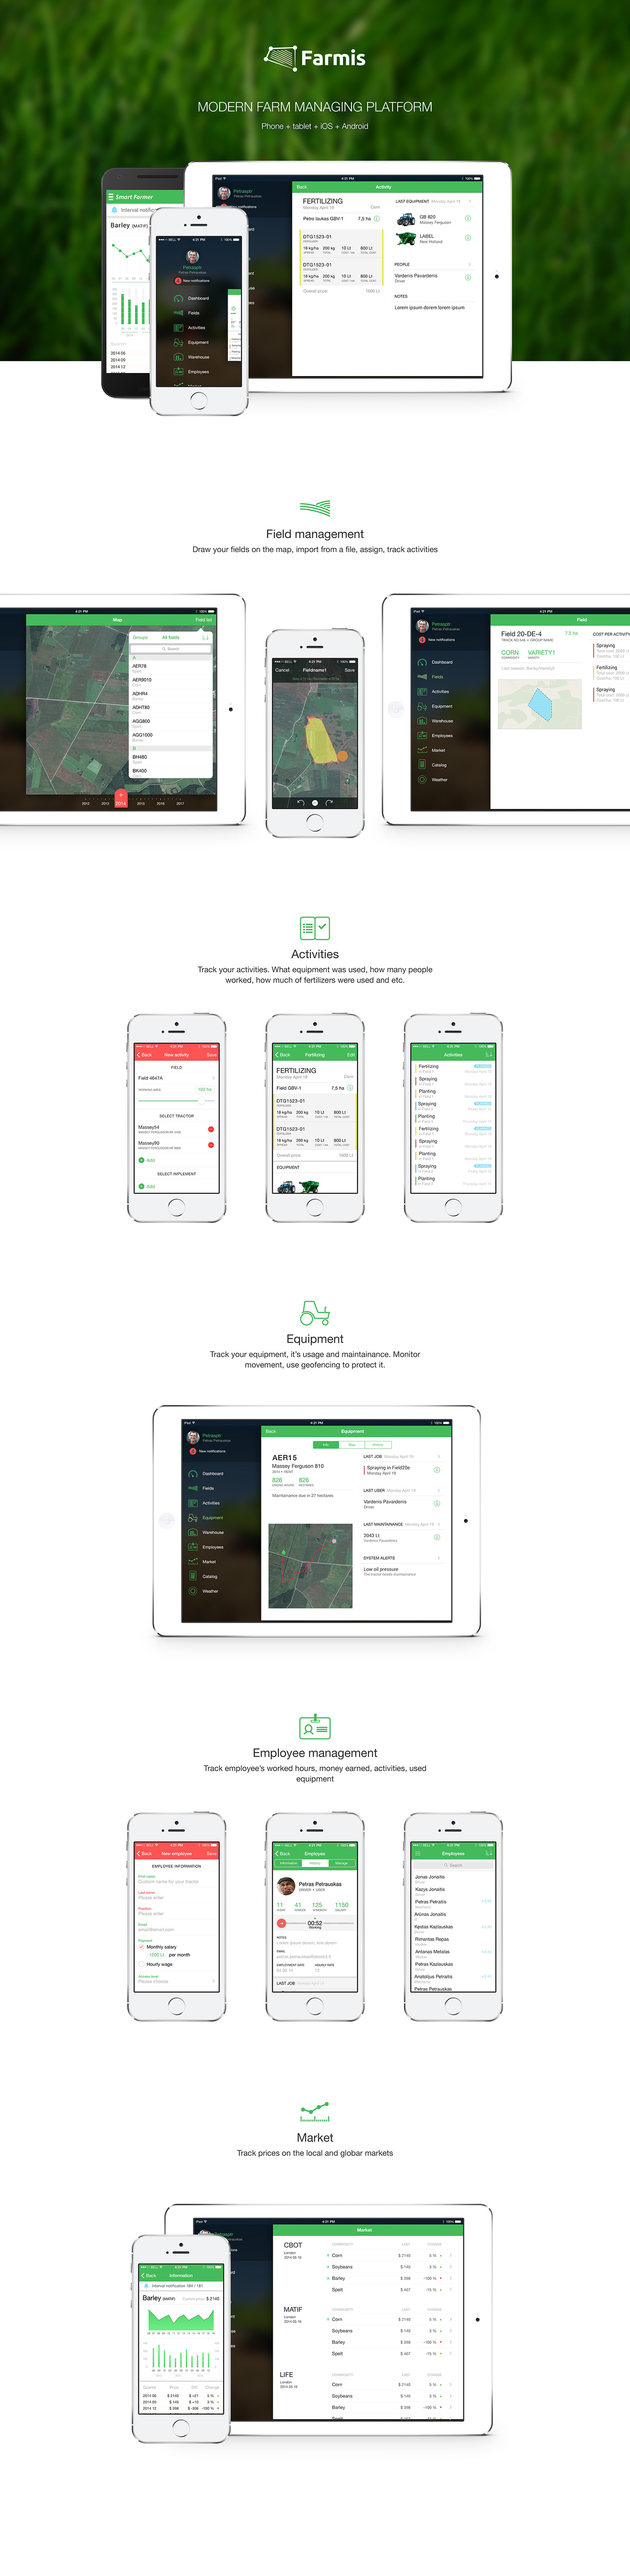 ios android iphone iPad application app farm management 